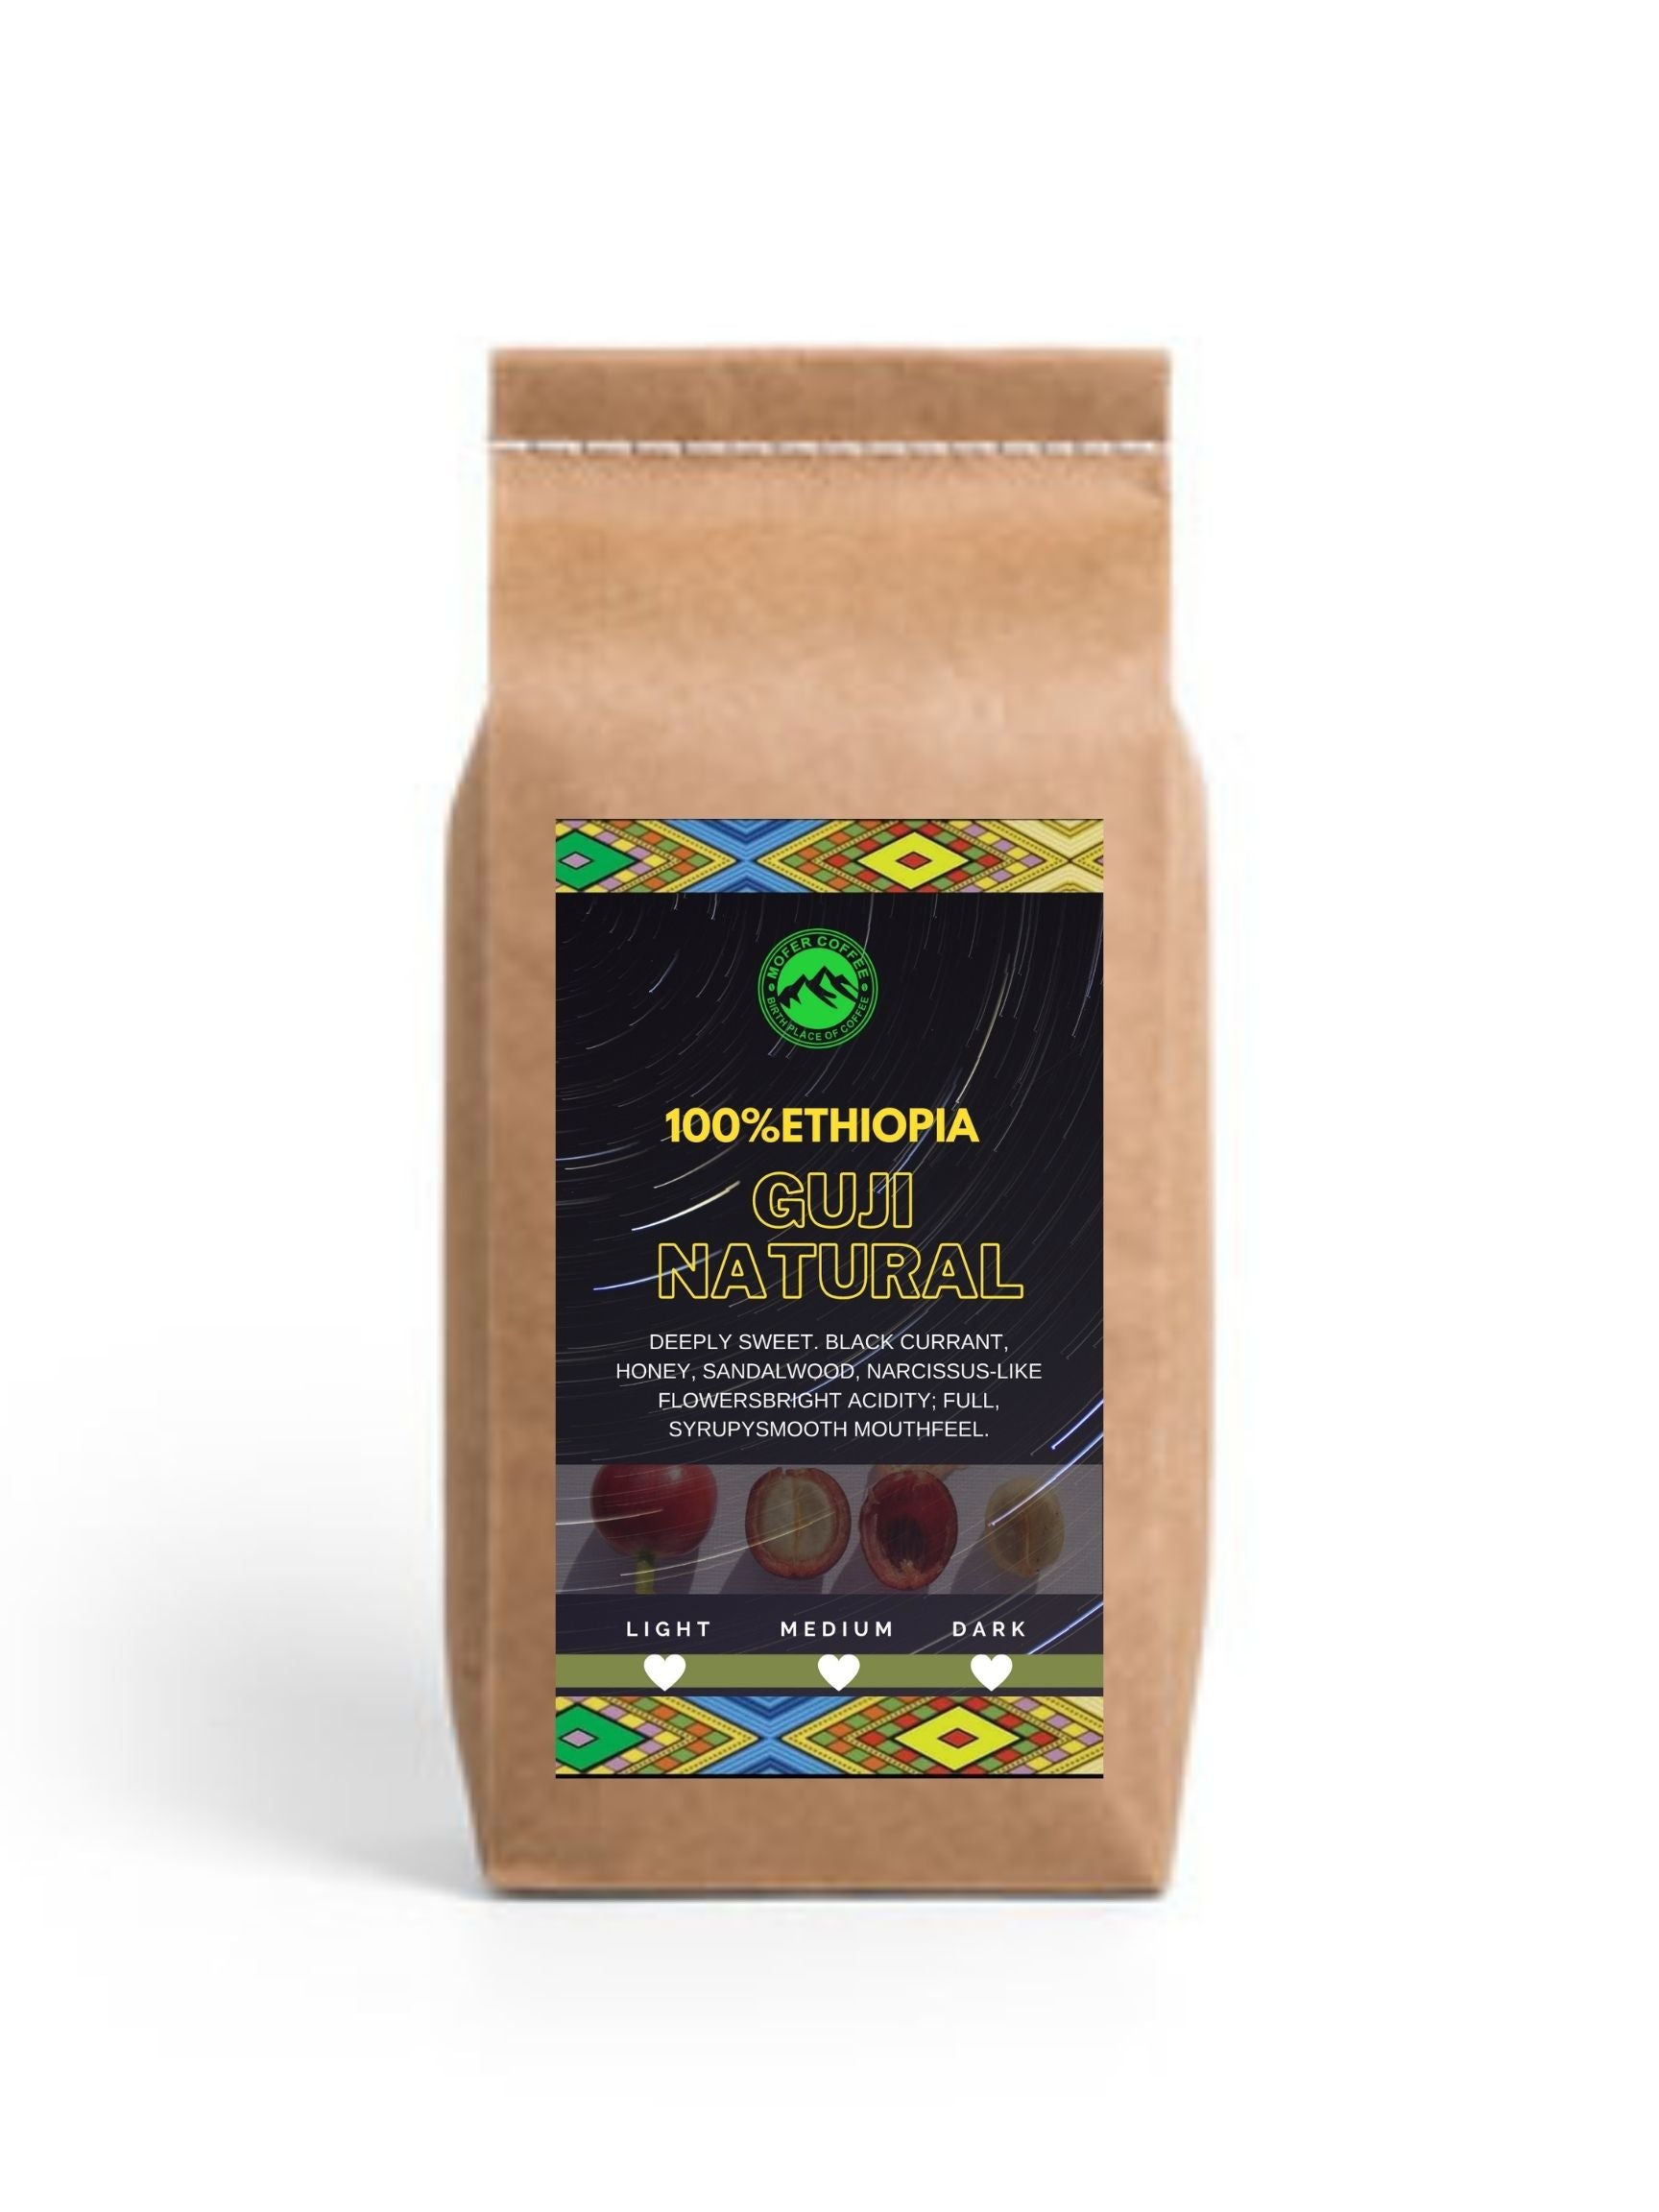 Ethiopian Guji Natural Ground Coffee